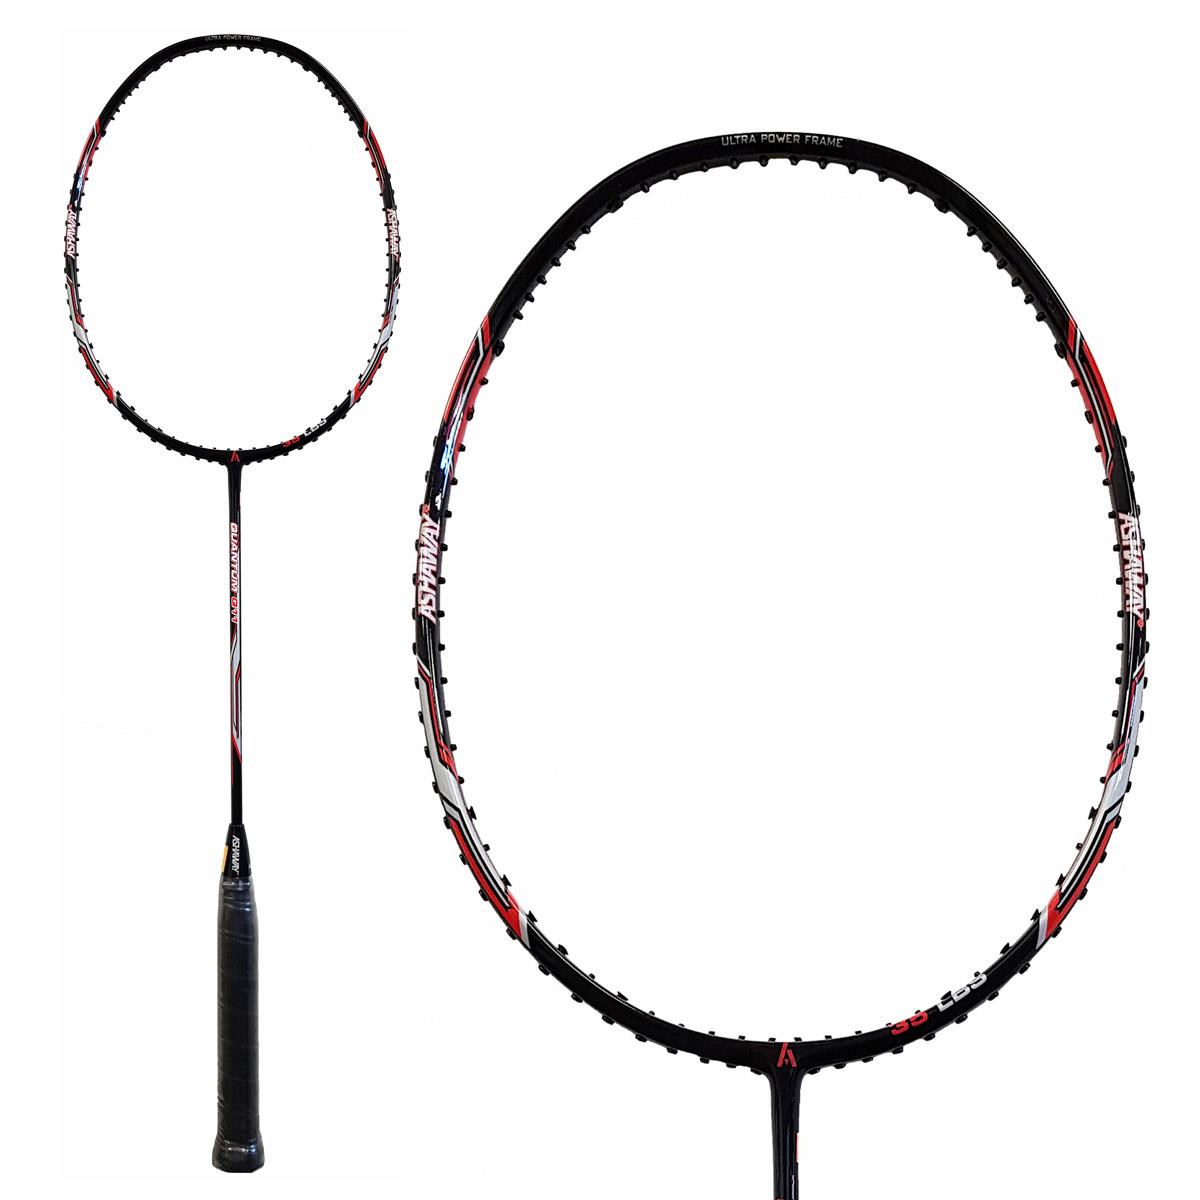 Ashaway Quantum Q11 Badminton Racket - Black / Red